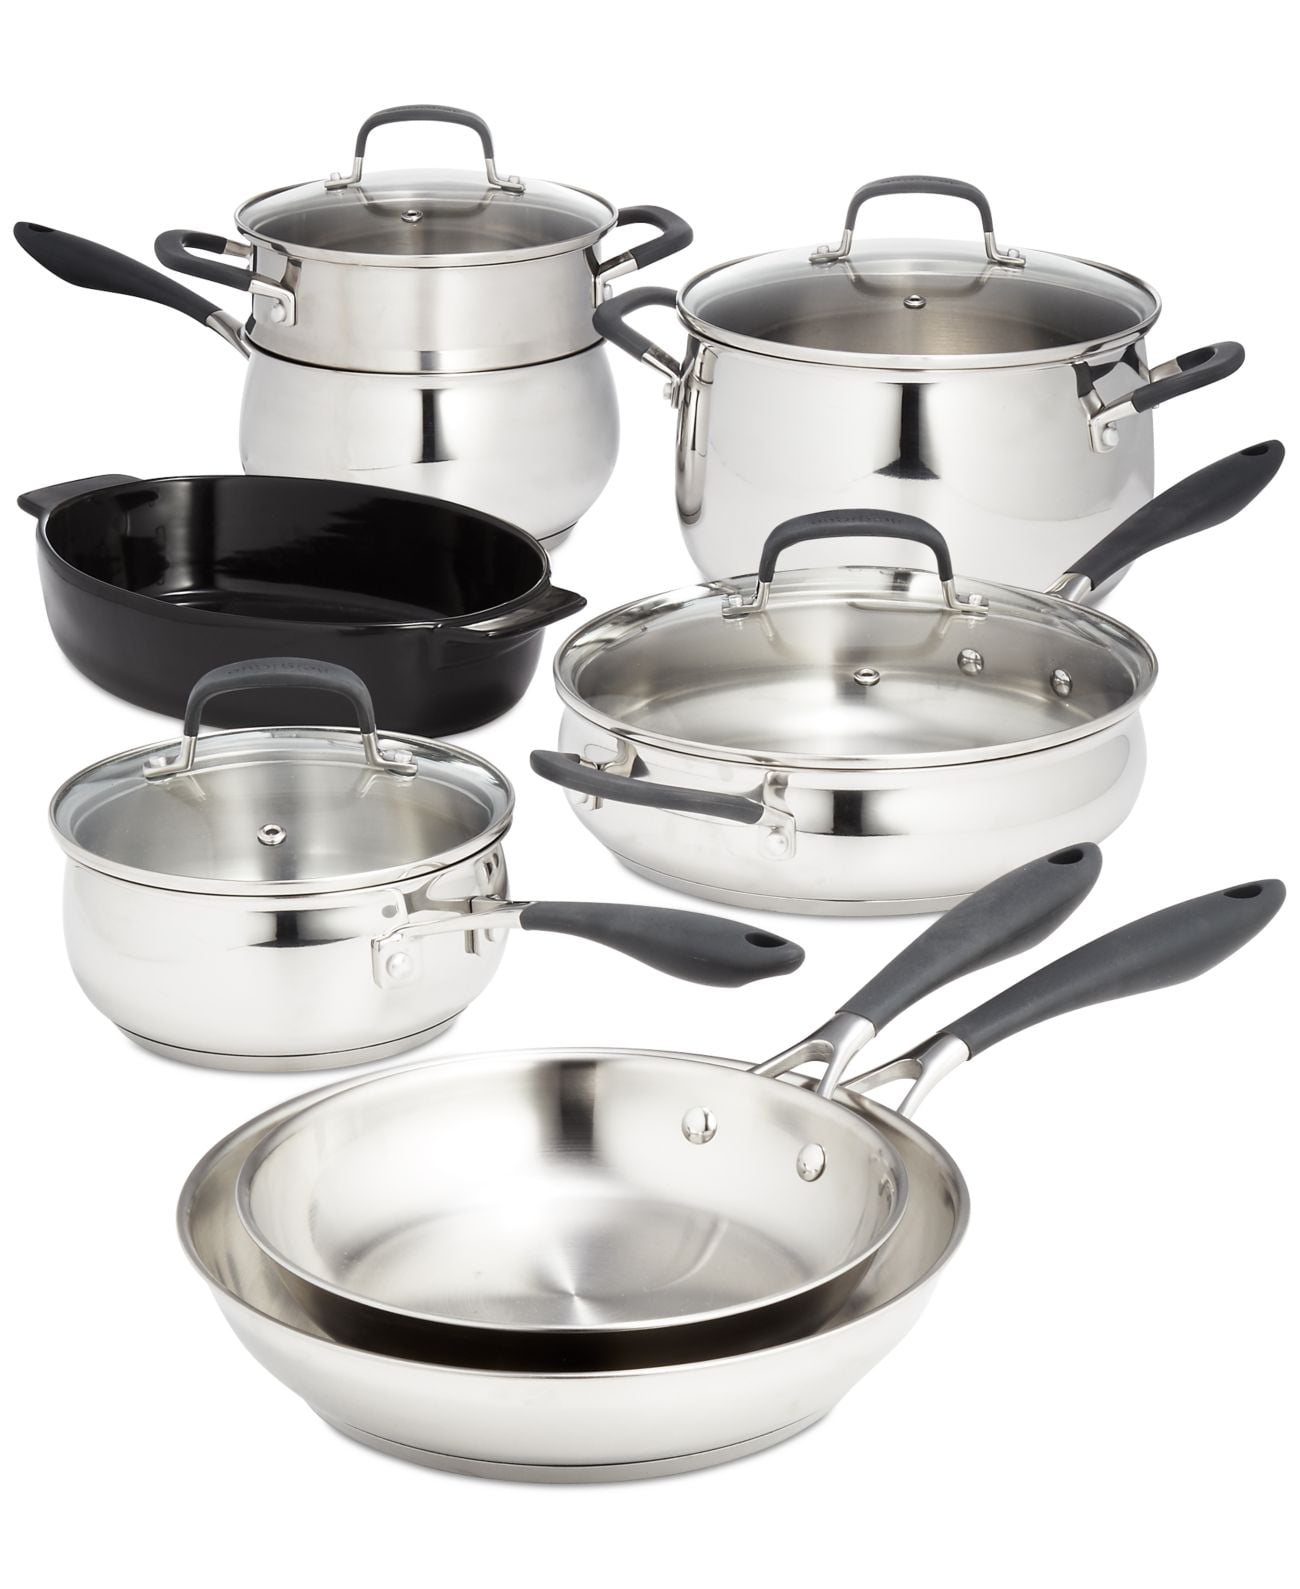 Belgique Stainless Steel 12-Pc. Cookware Set 